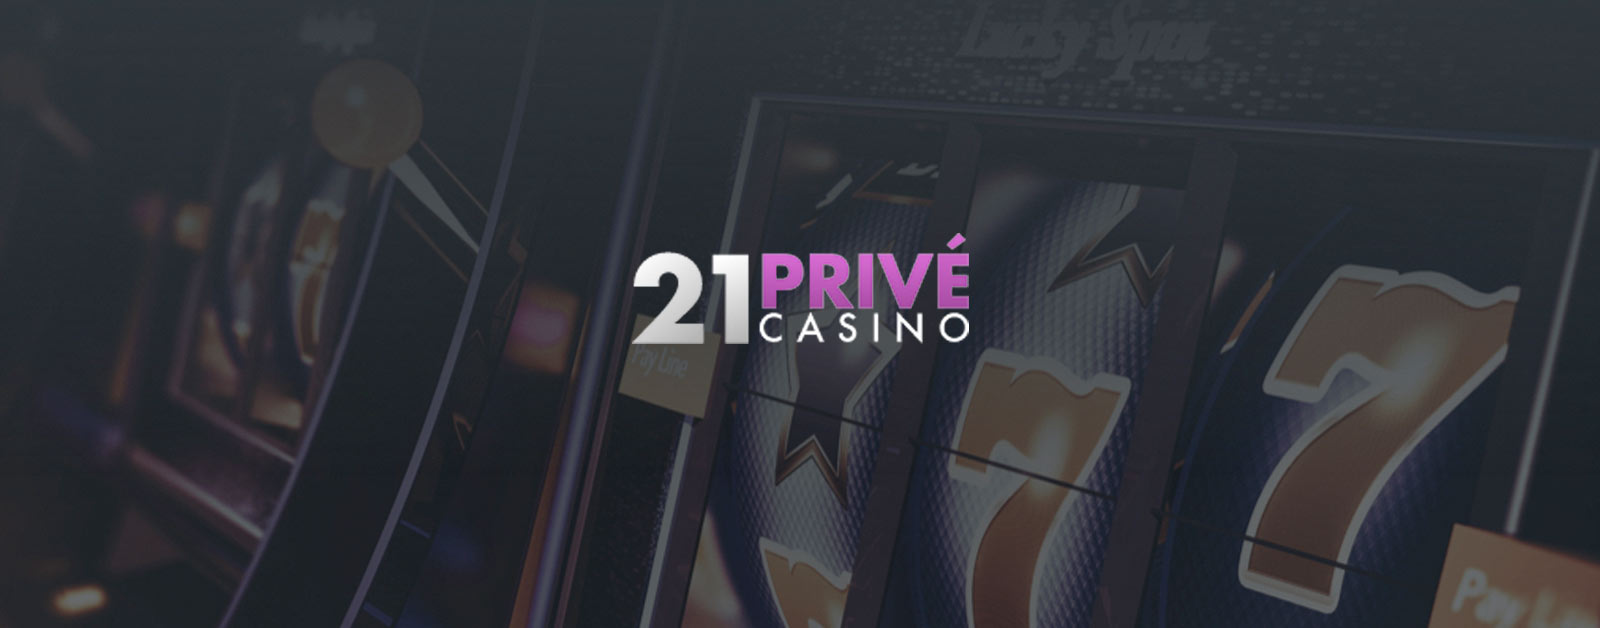 21prive casino bonus